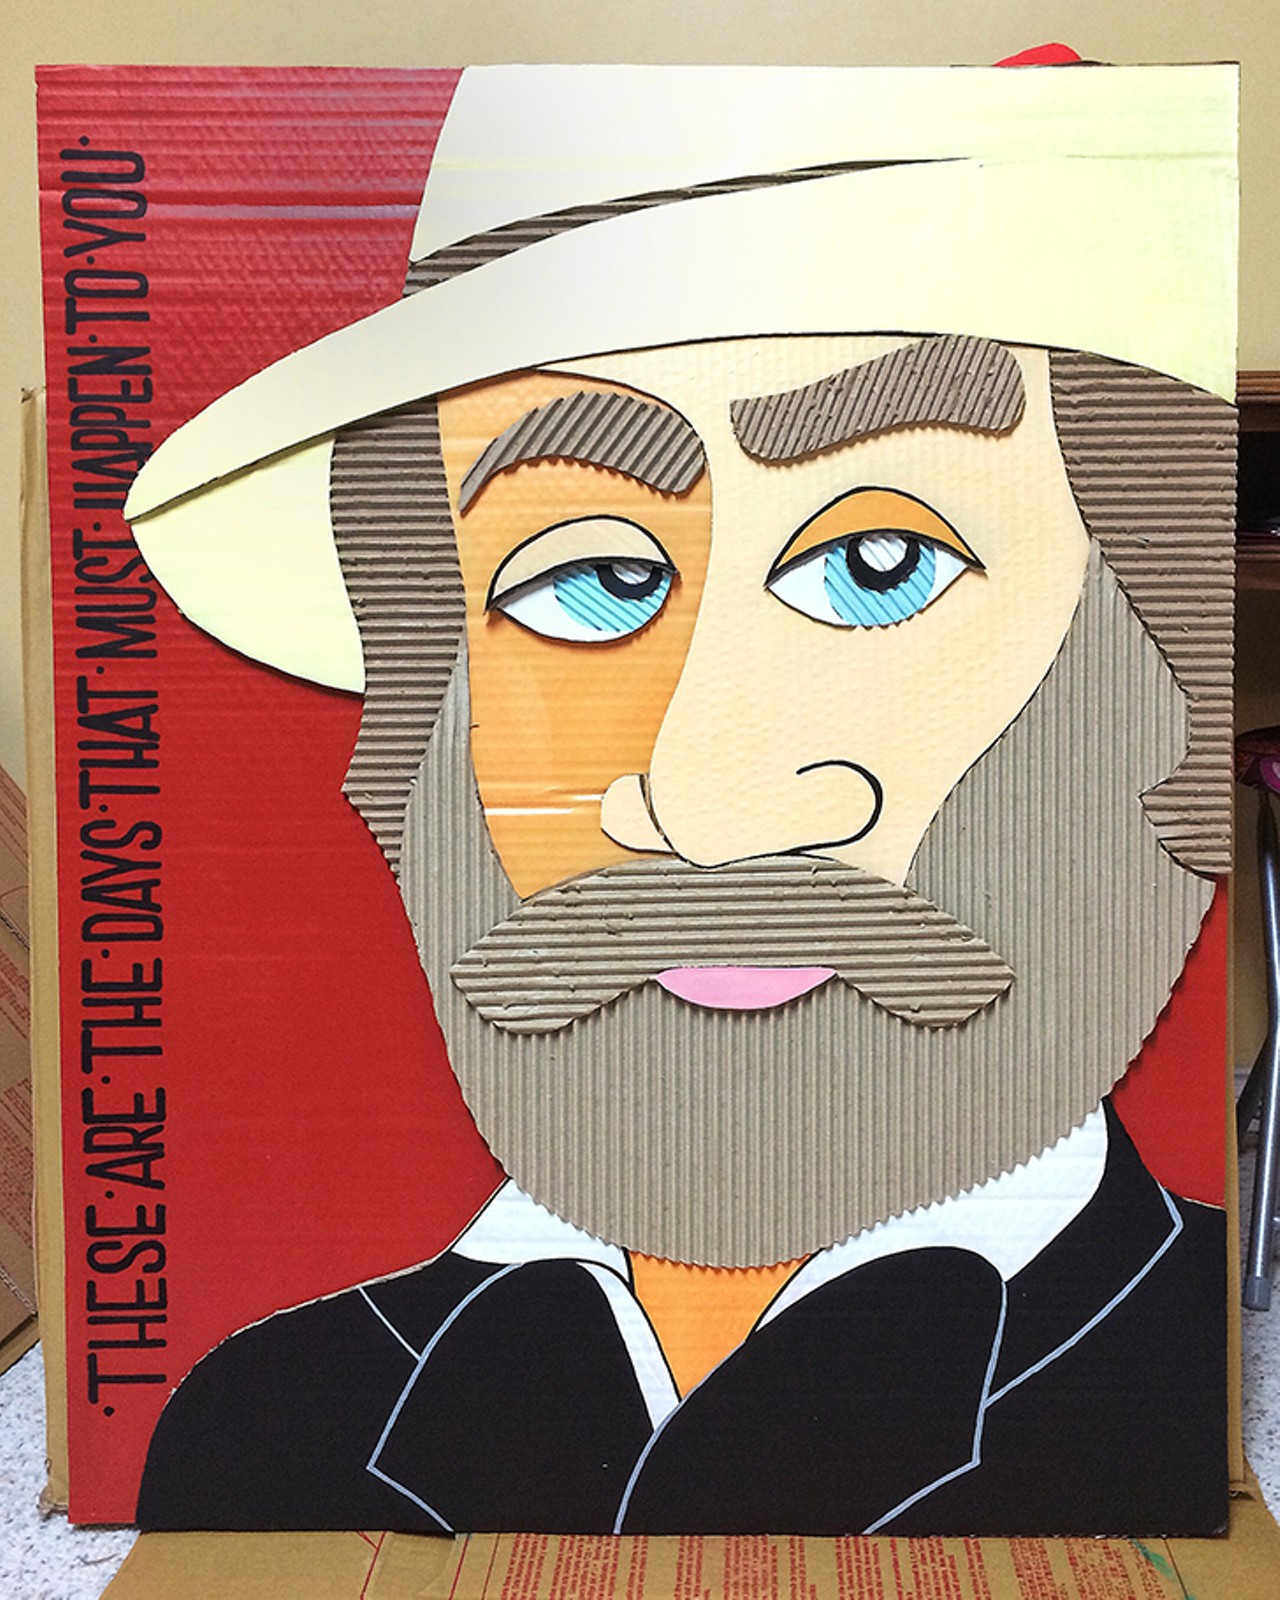 Opens Friday, July 22Cardboard Art Festival at SoDo Shopping Center"Walt Whitman" by Paula J. Lambert